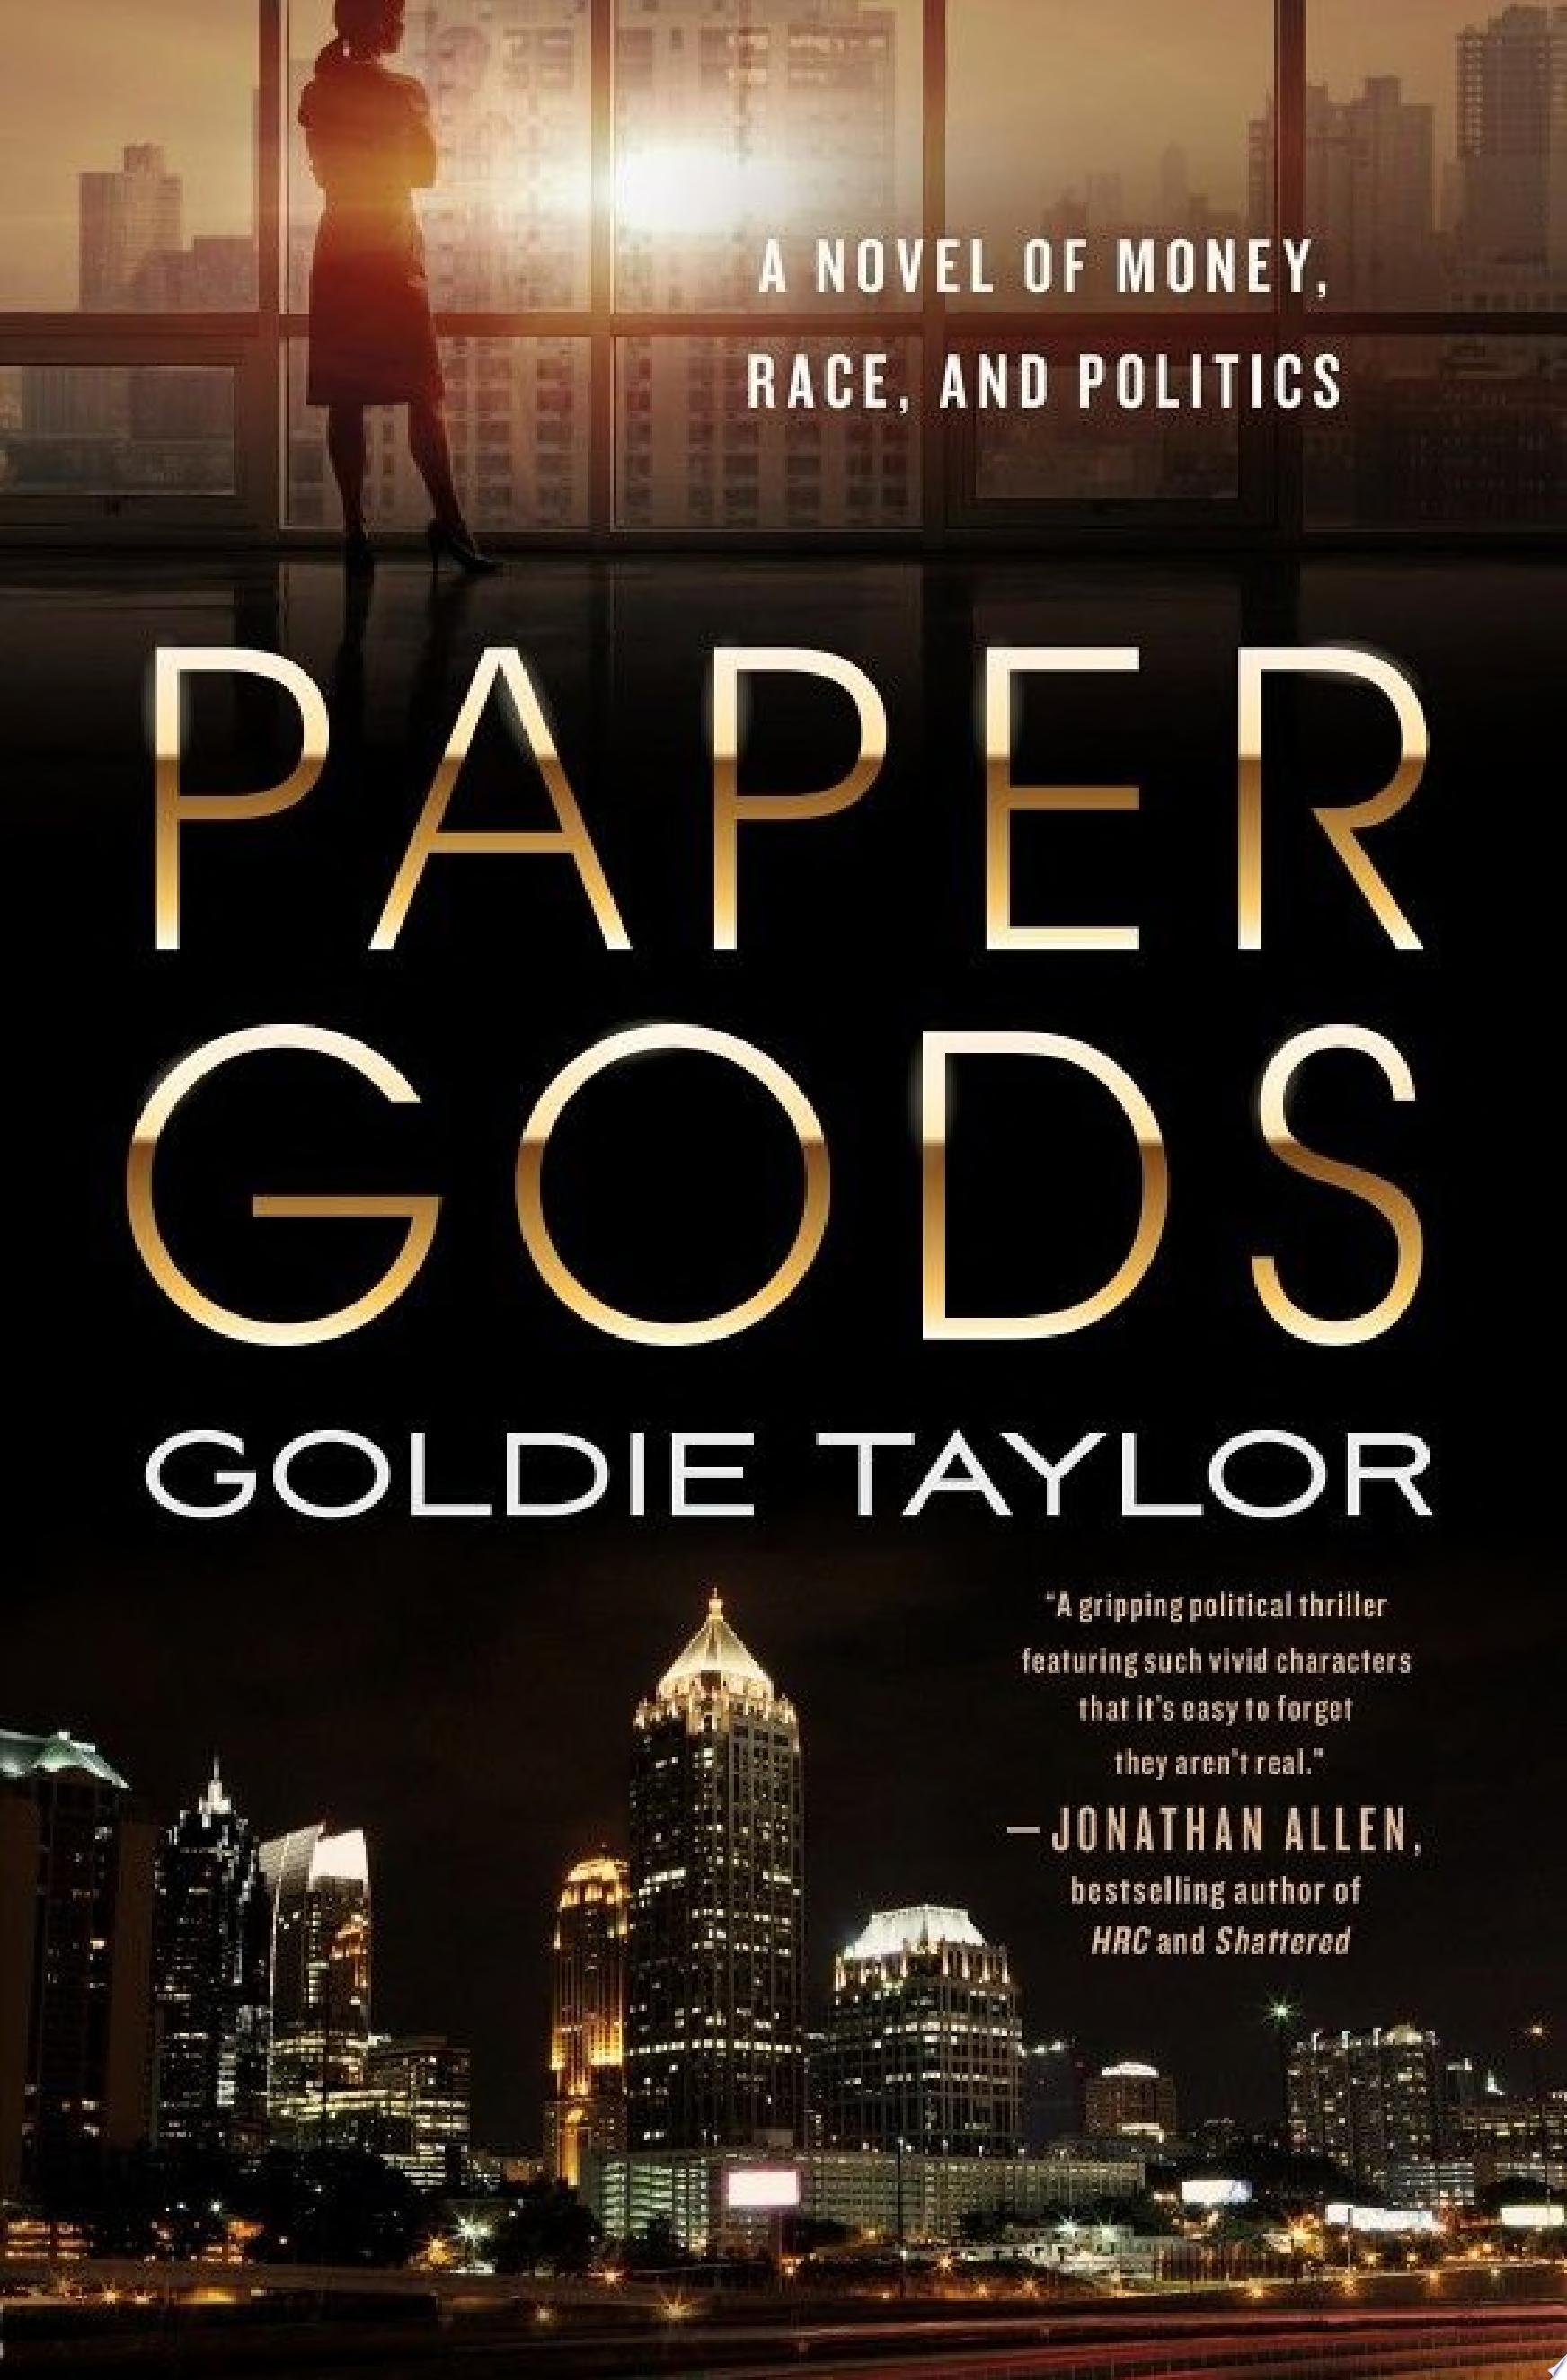 Image for "Paper Gods"